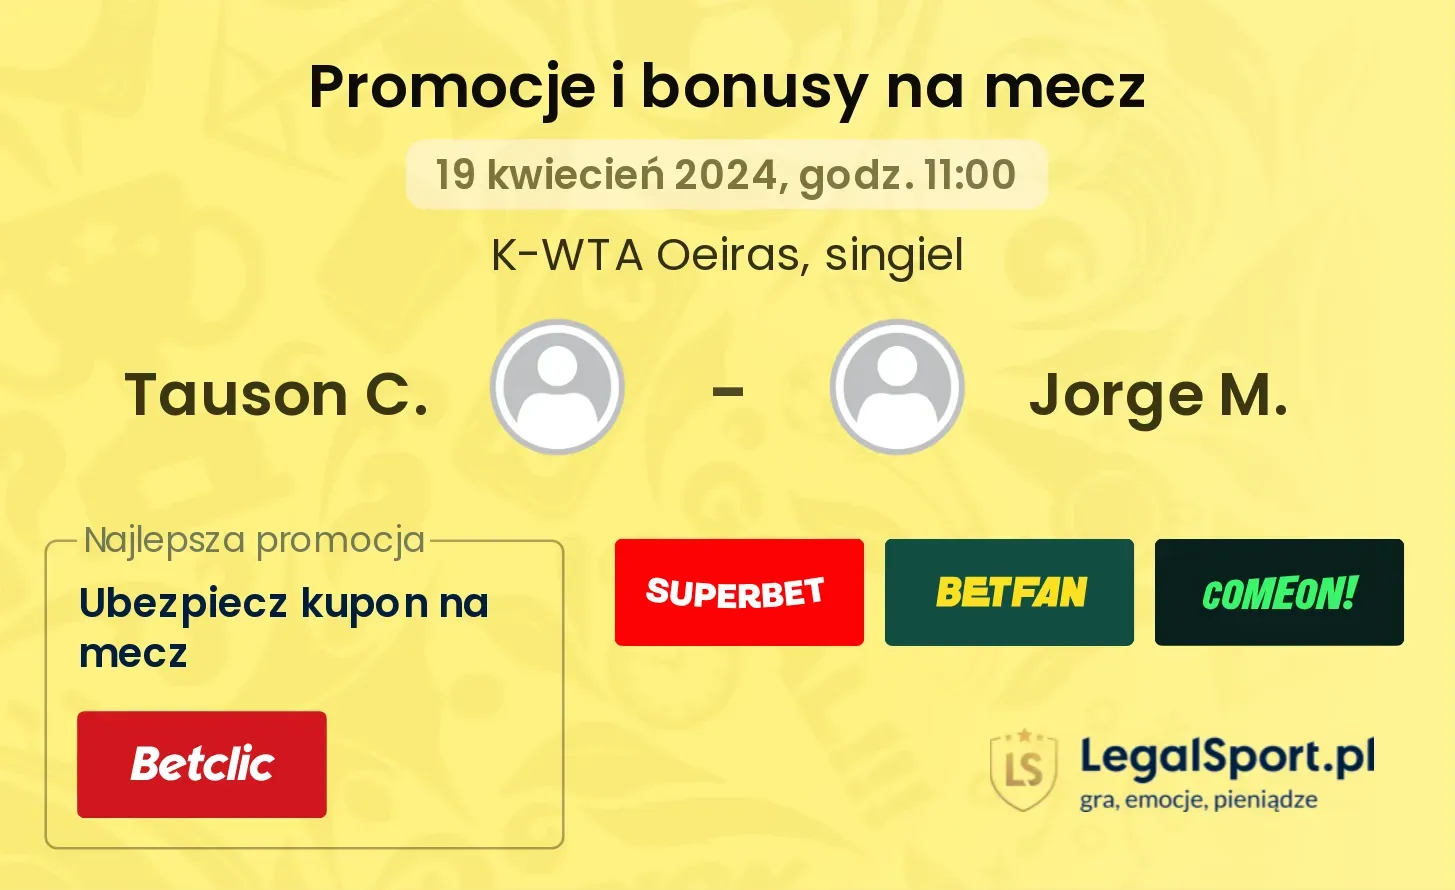 Tauson C. - Jorge M. promocje bonusy na mecz